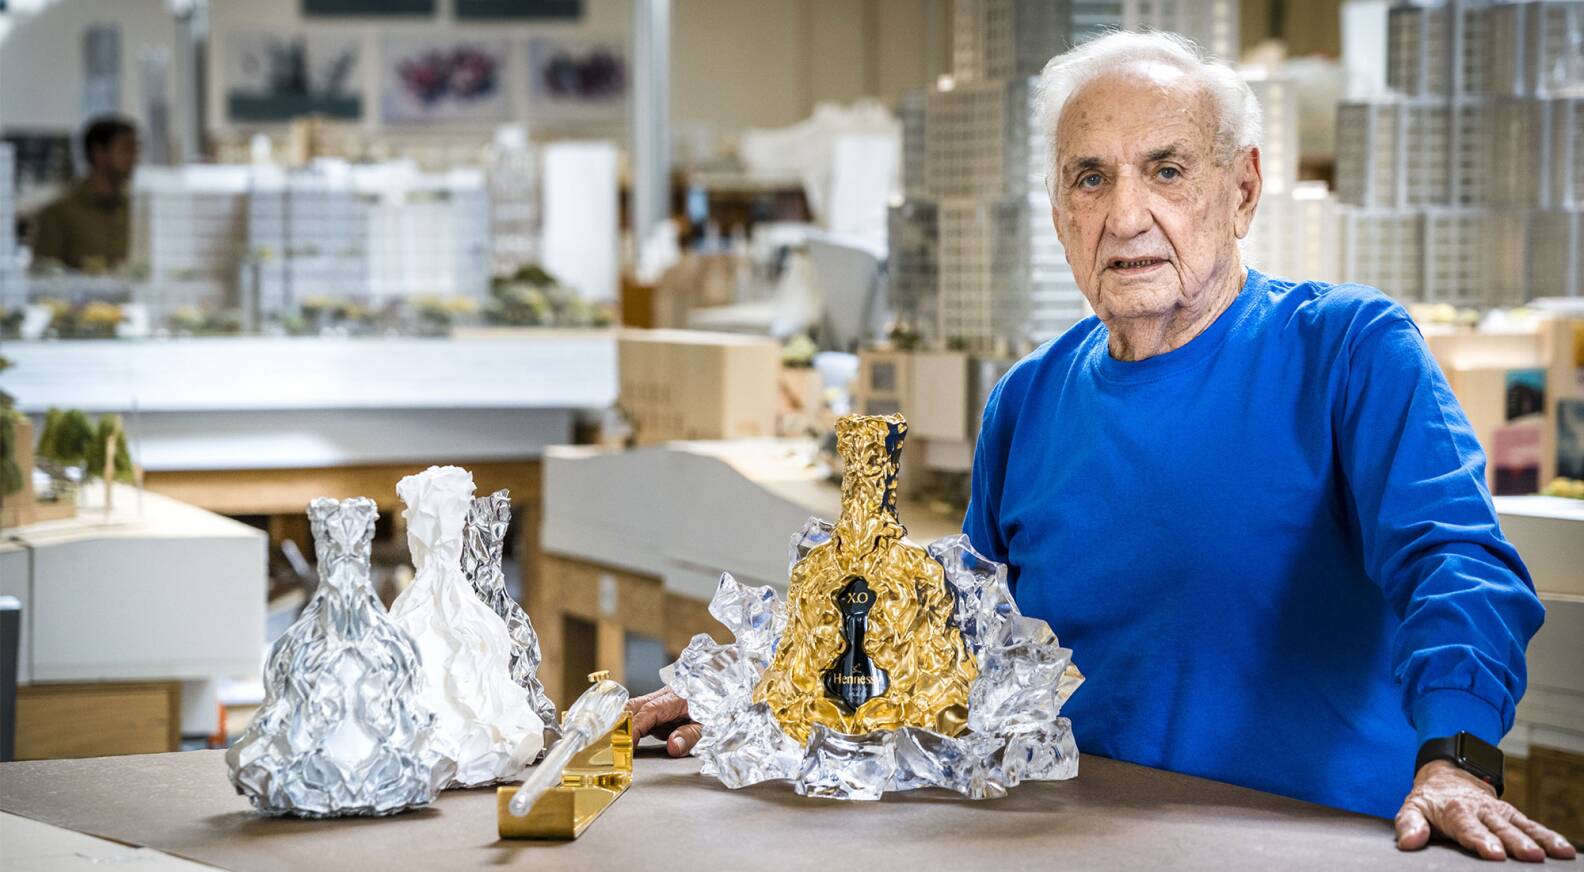 Frank Gehry designs new Louis Vuitton perfume bottles